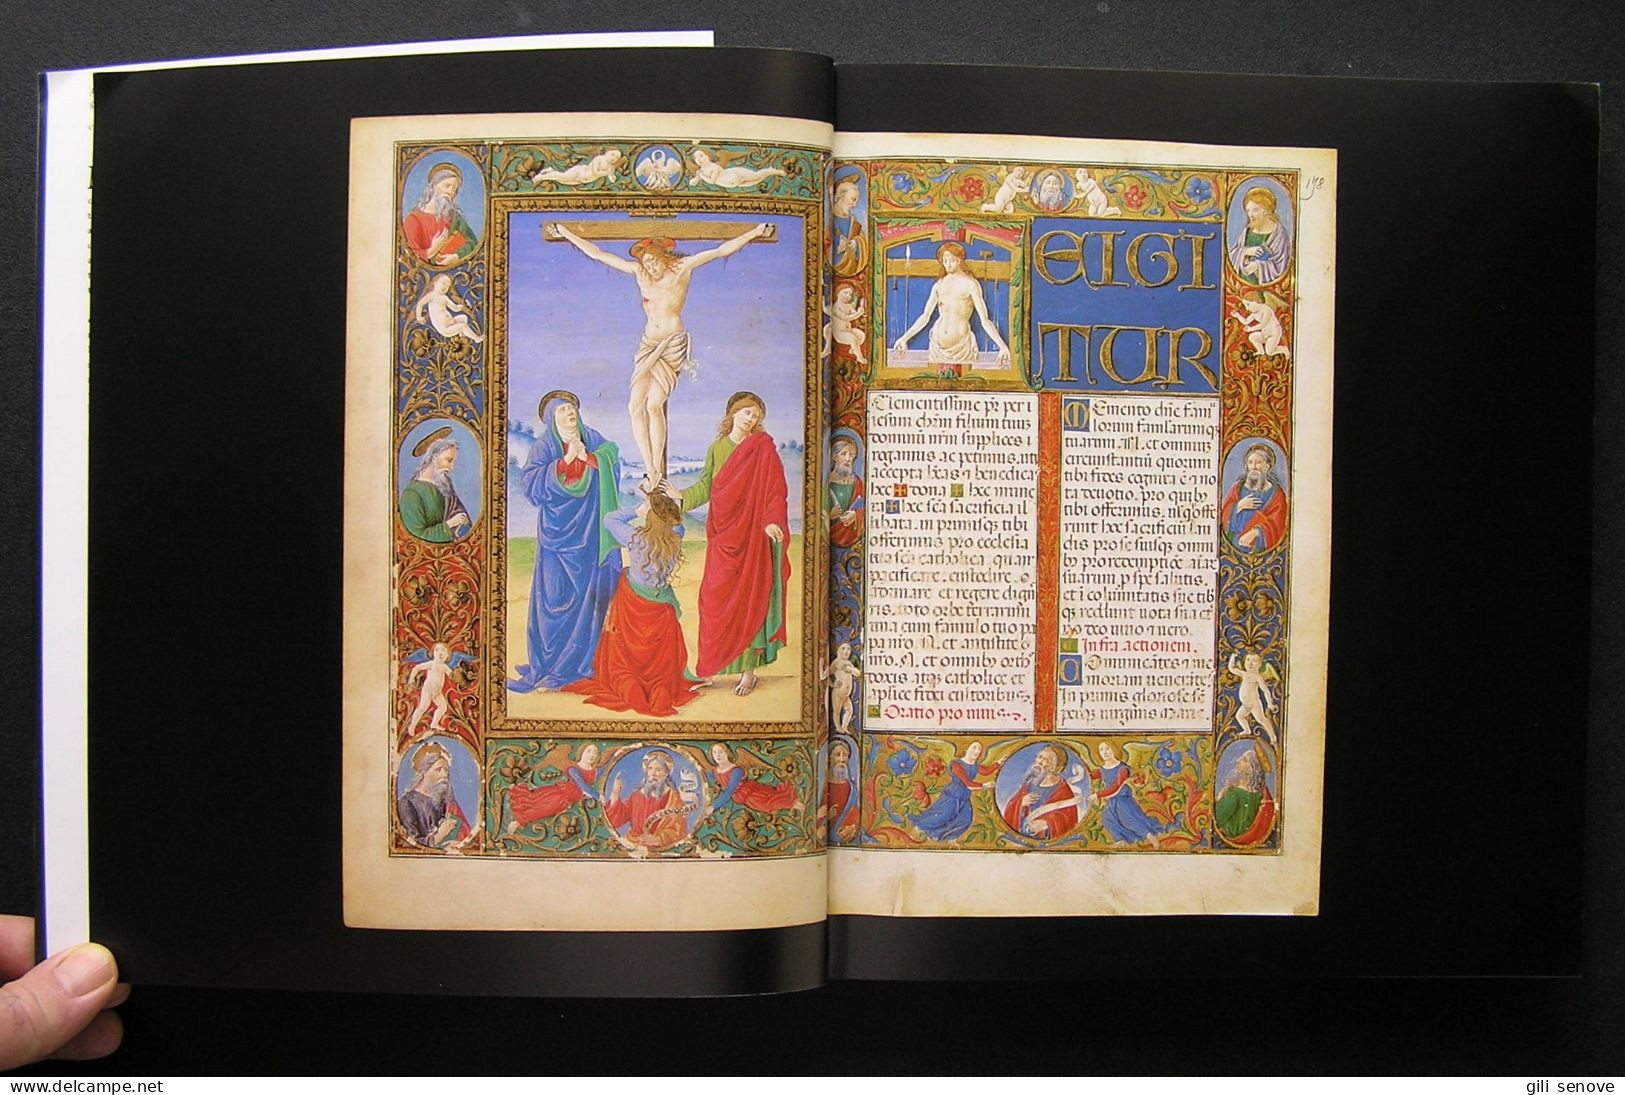 A History Of Illuminated Manuscripts 2006 - Ontwikkeling